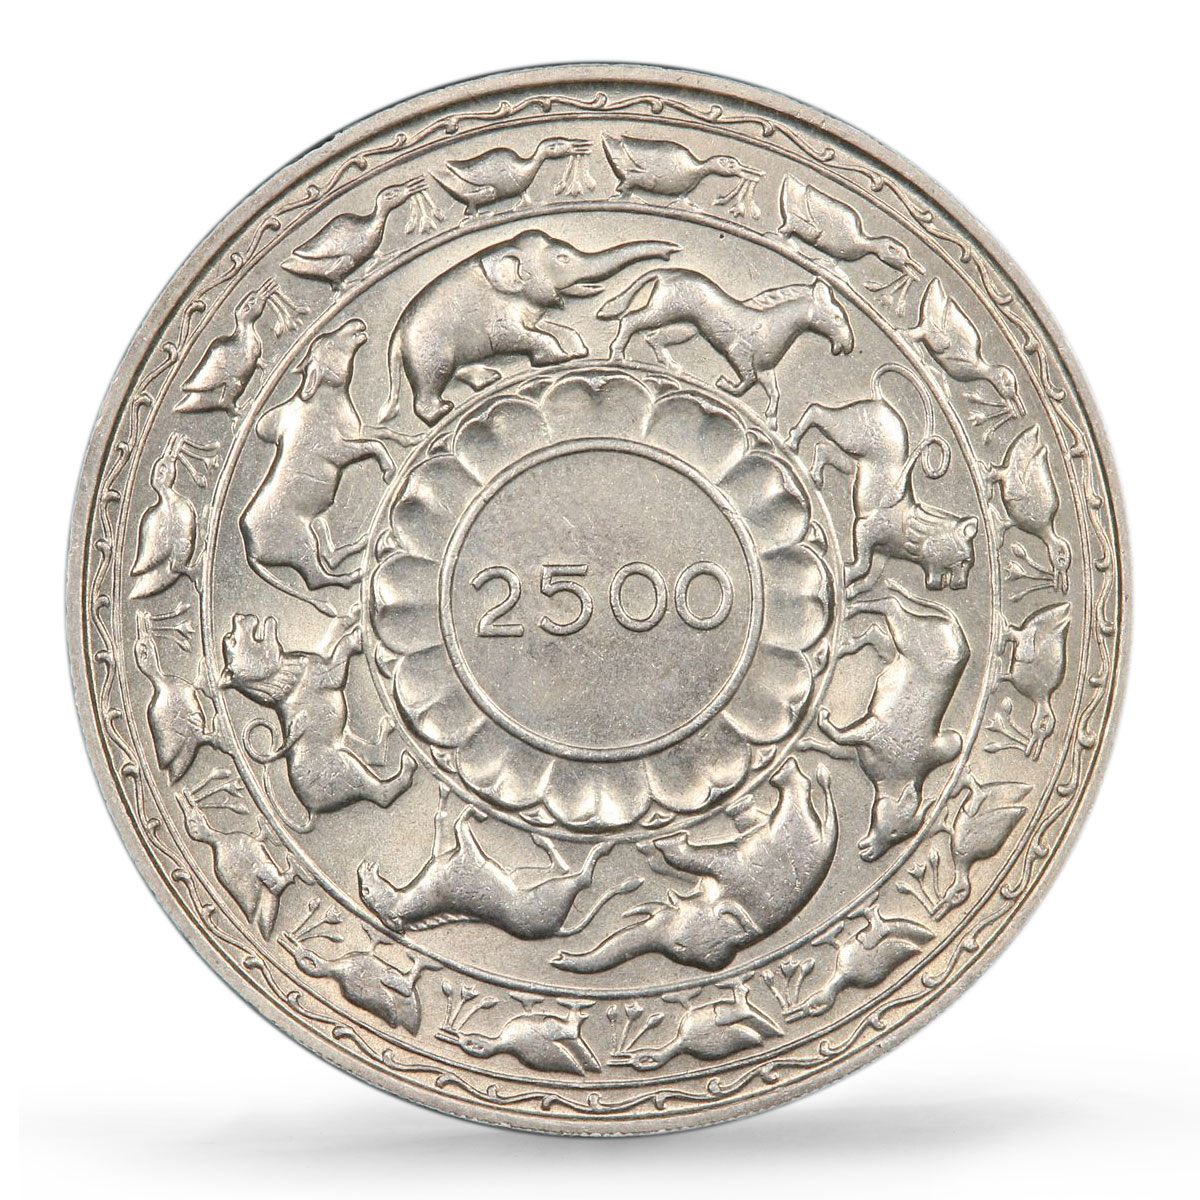 Sri Lanka Ceylon 5 rupees Buddhism 2500 Years Animals MS65 PCGS silver coin 1957